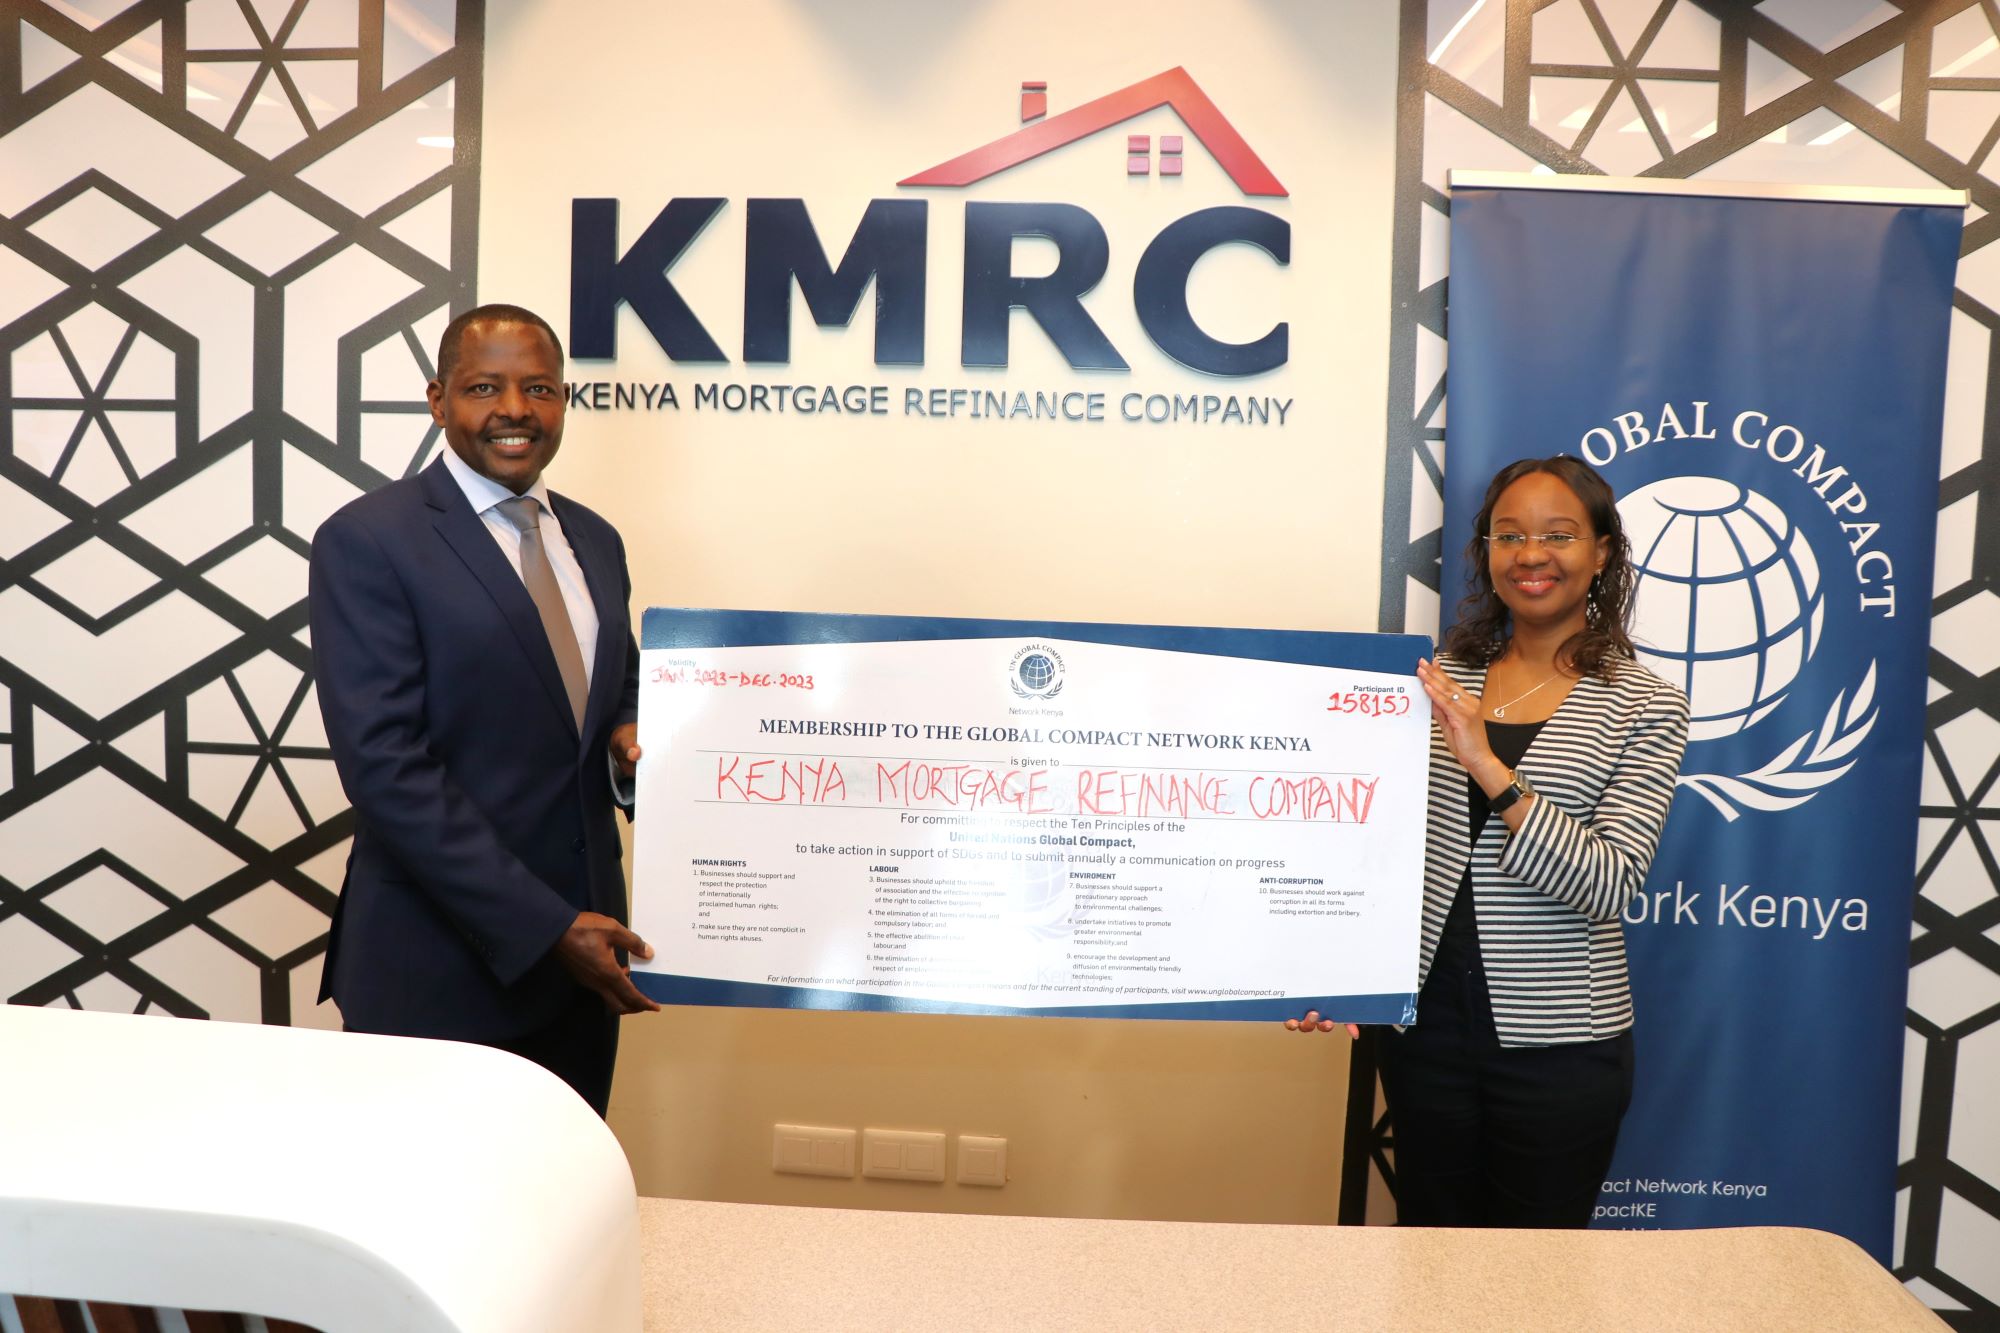 Global Compact Network Kenya welcomes Kenya Mortgage Refinance Company to the UN Global Compact